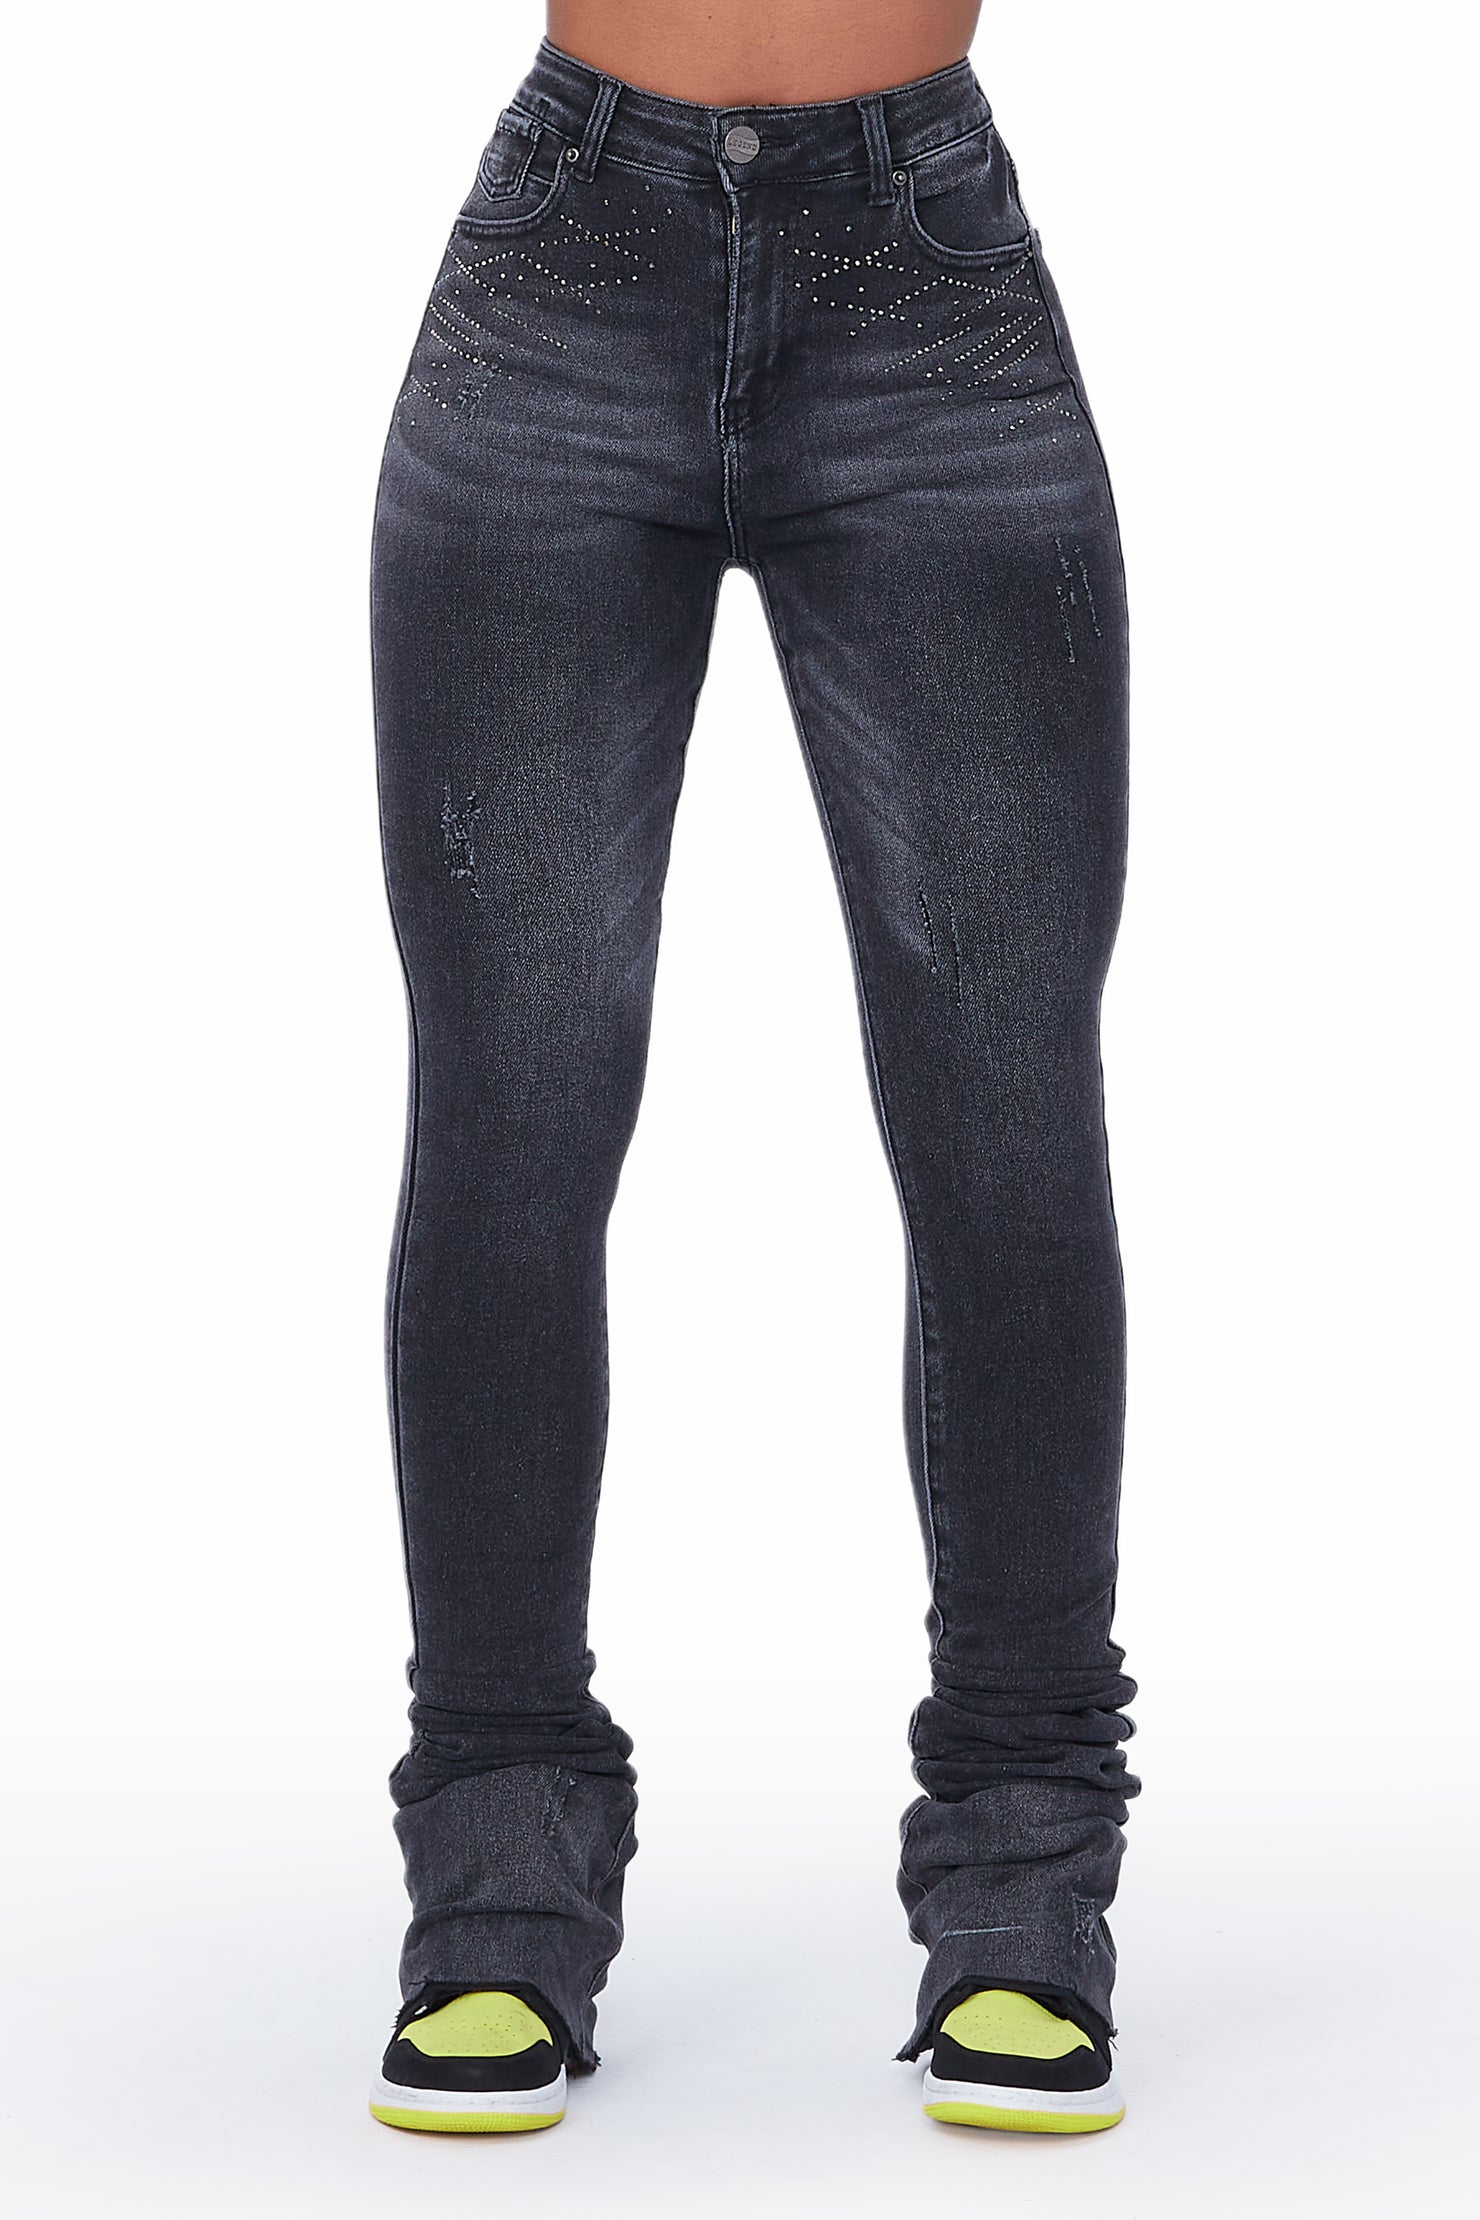 Rockstar Yatchy Denim Jeans (Black)